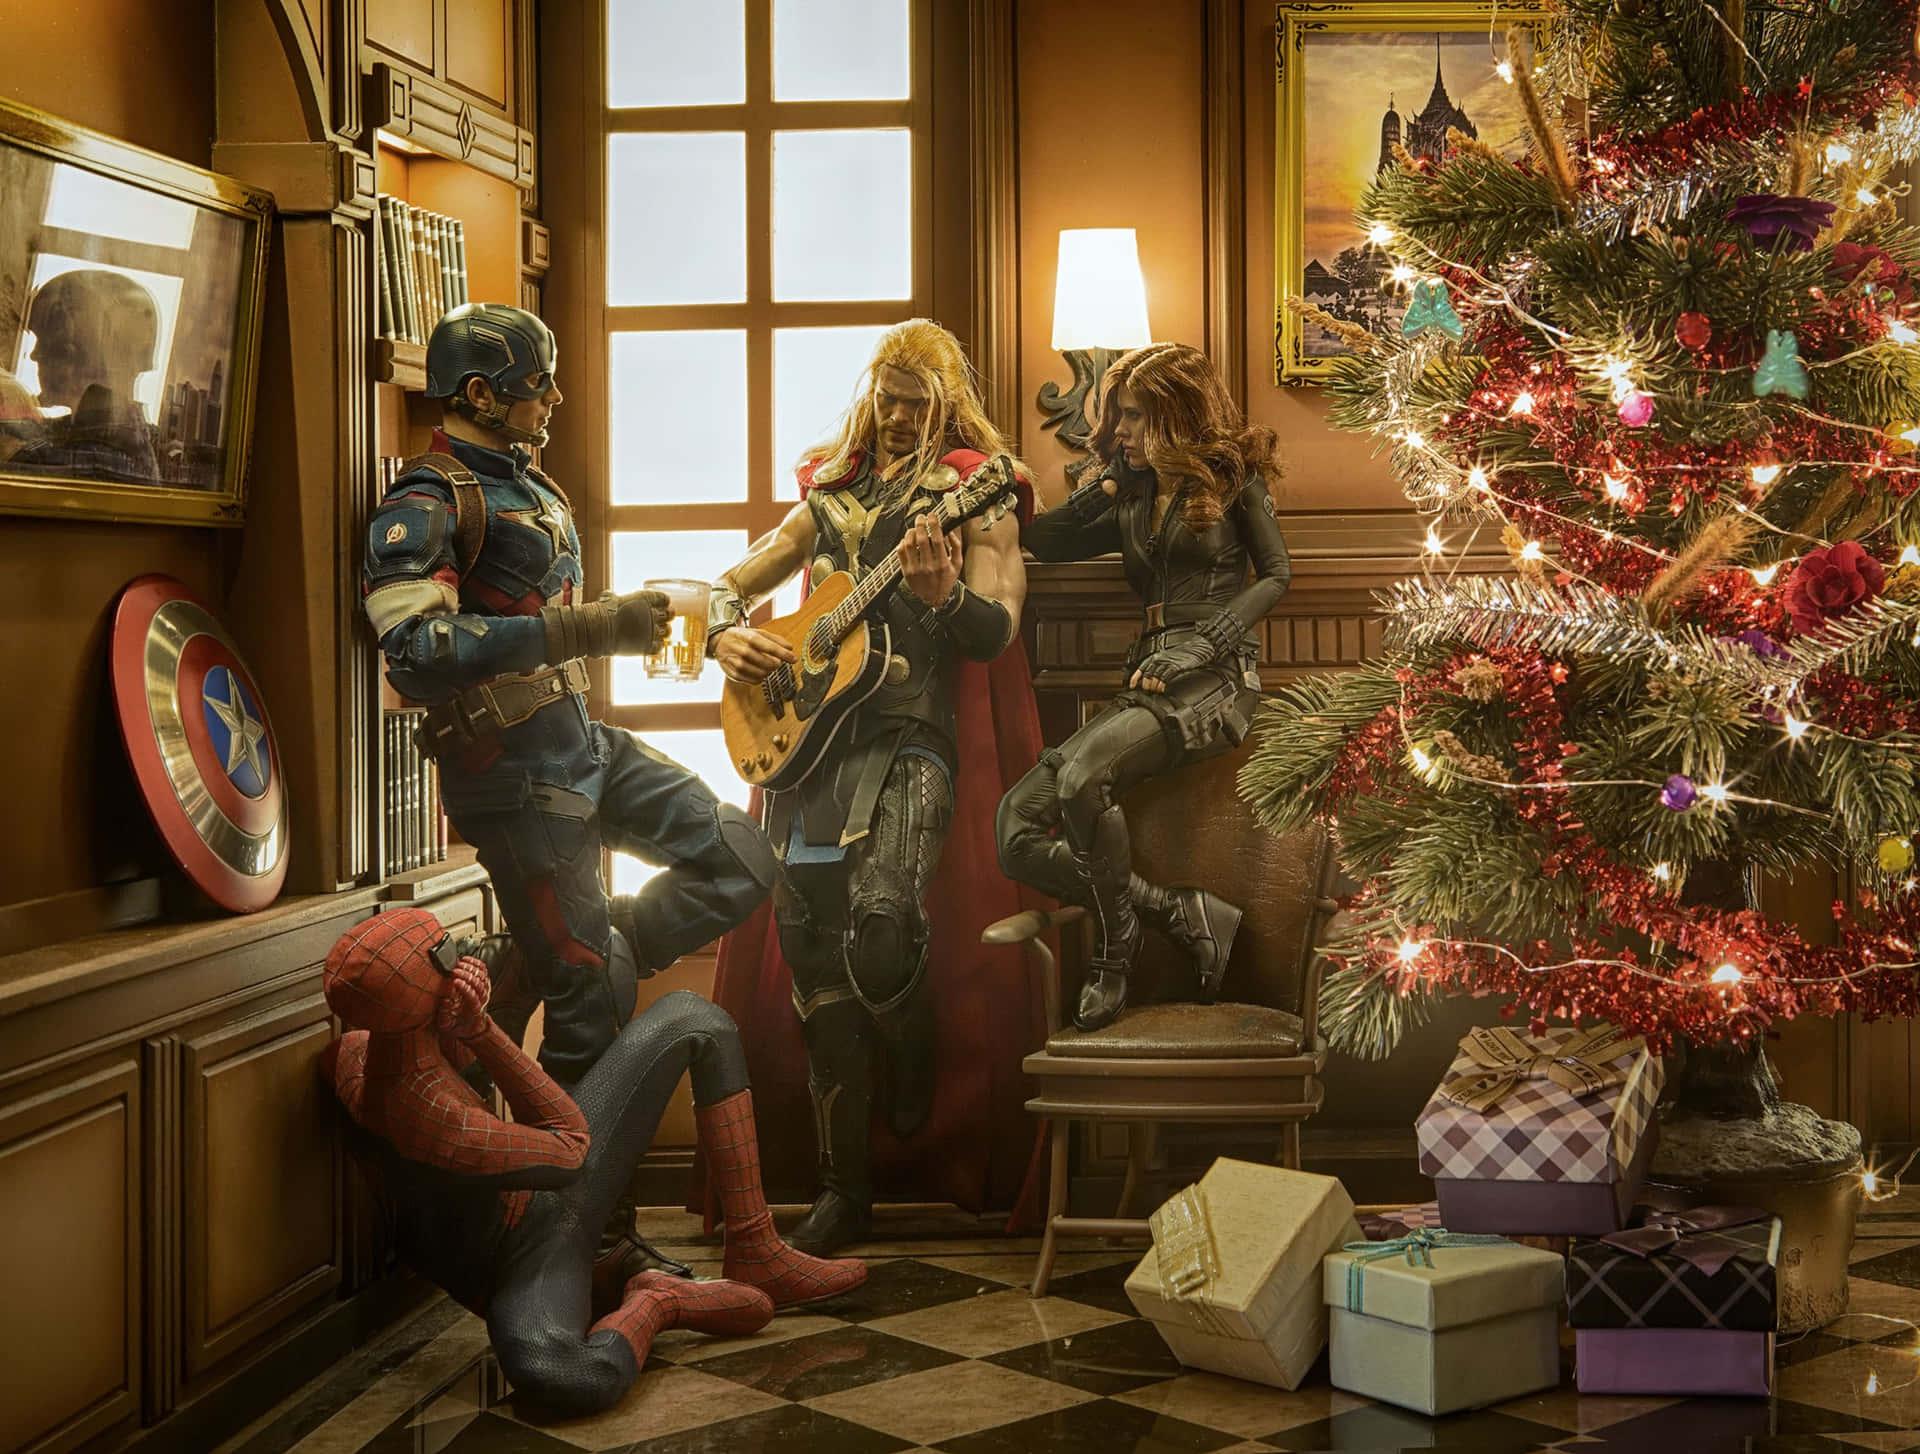  Marvel Christmas Wallpapers